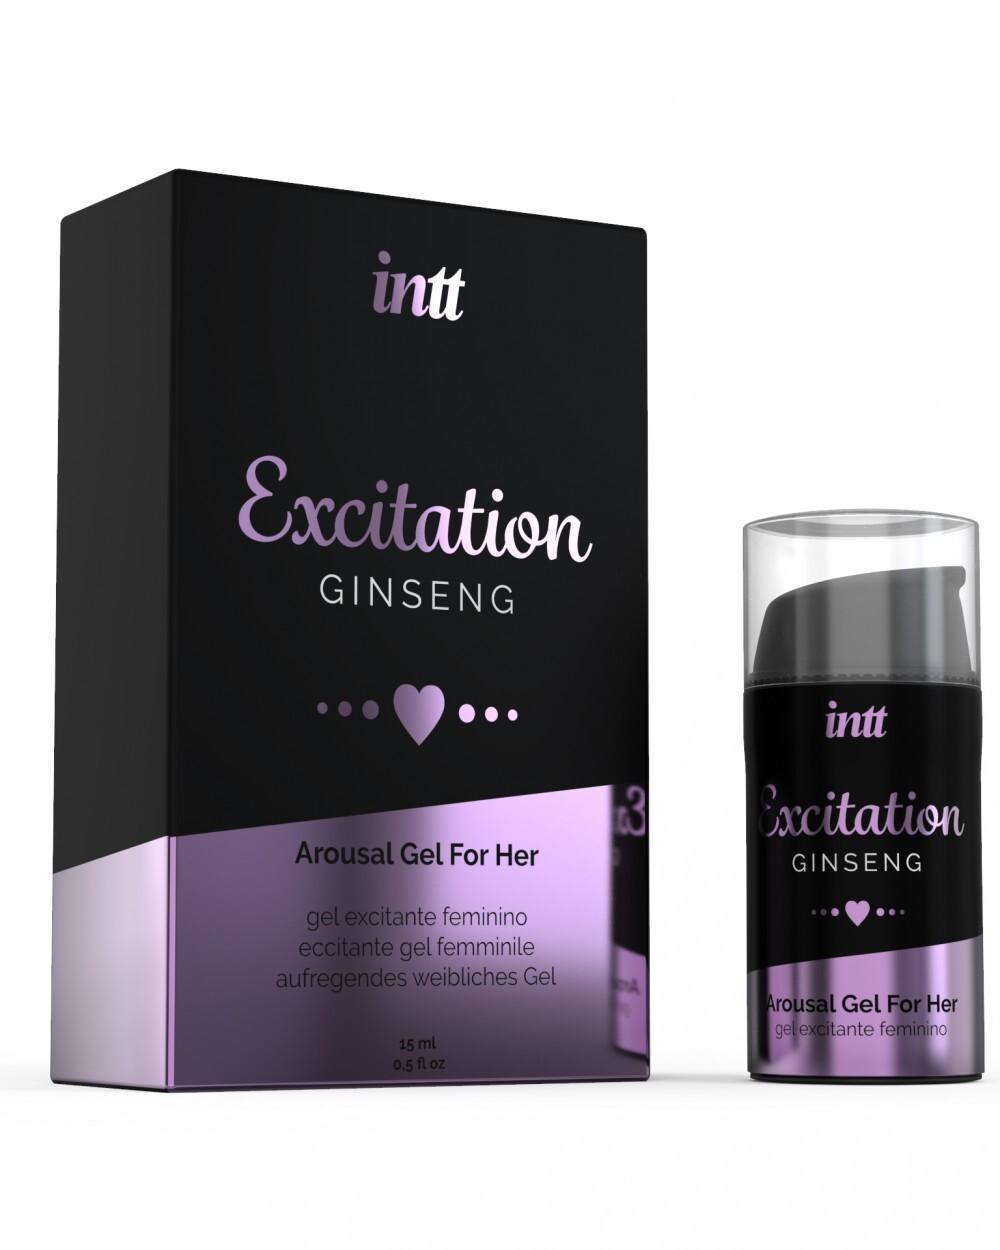 intt Excitation Arousal gel for her - Ginseng 15 ml intt